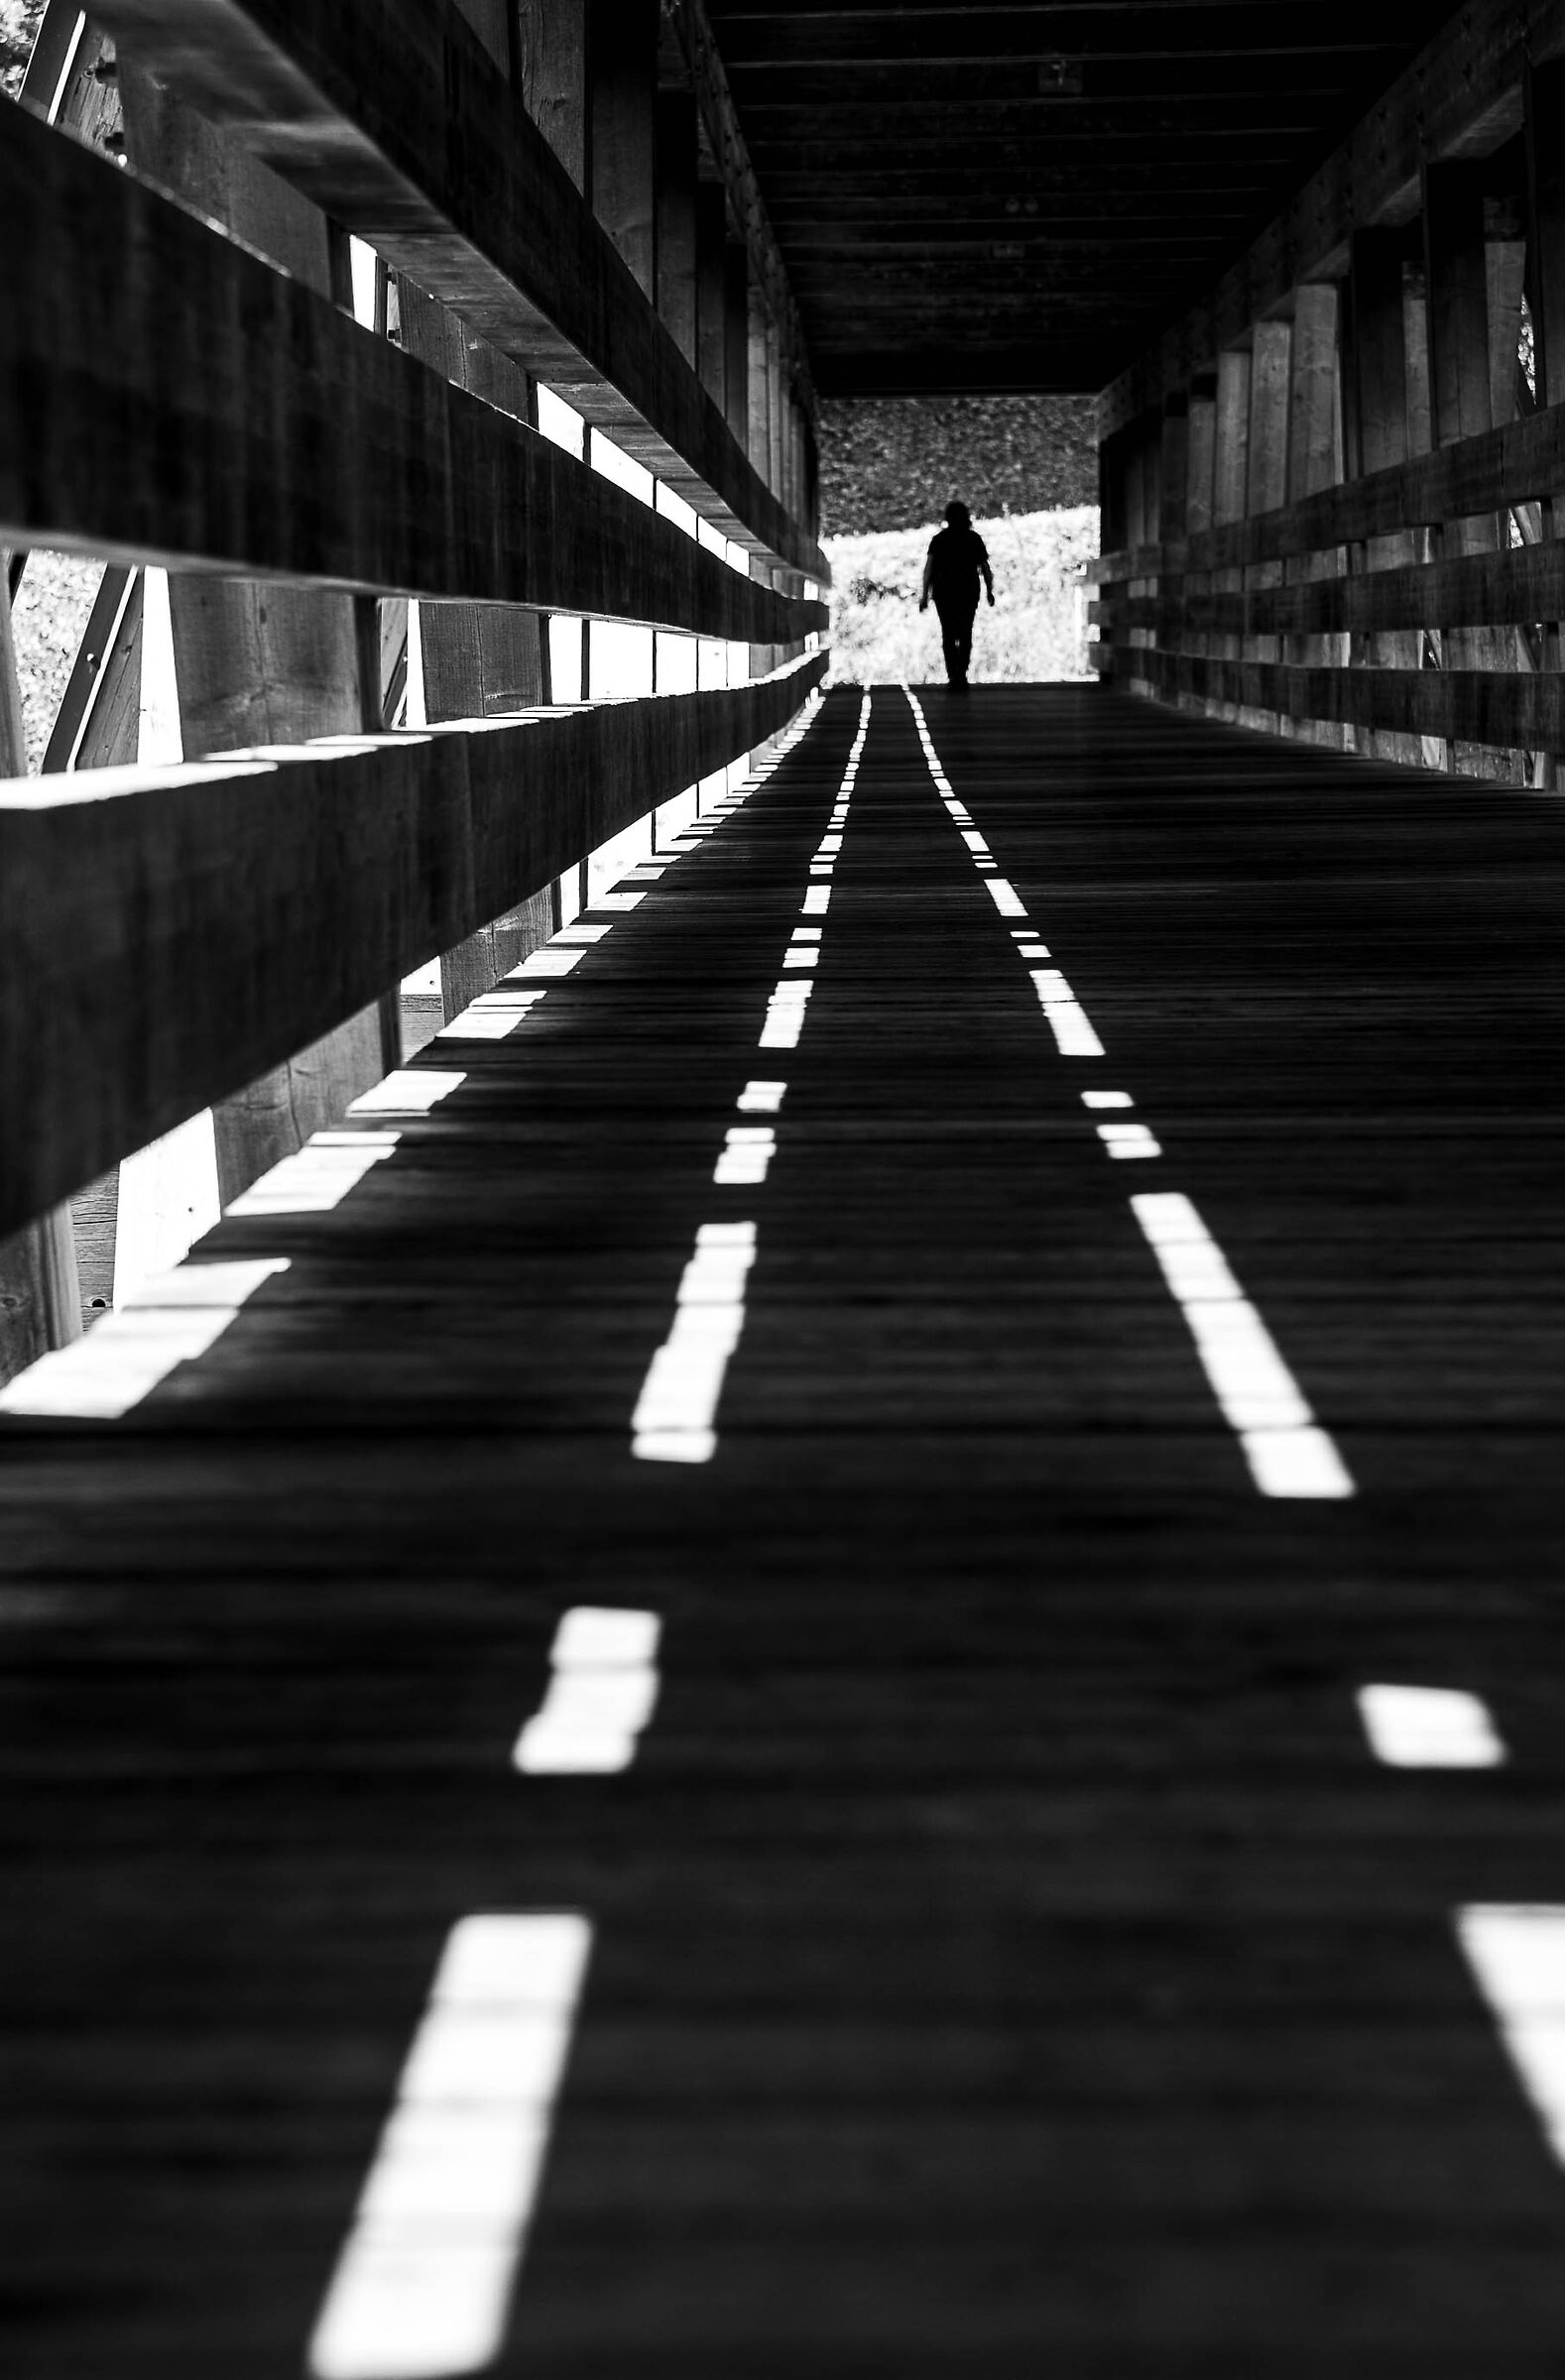 shadows on the bridge...